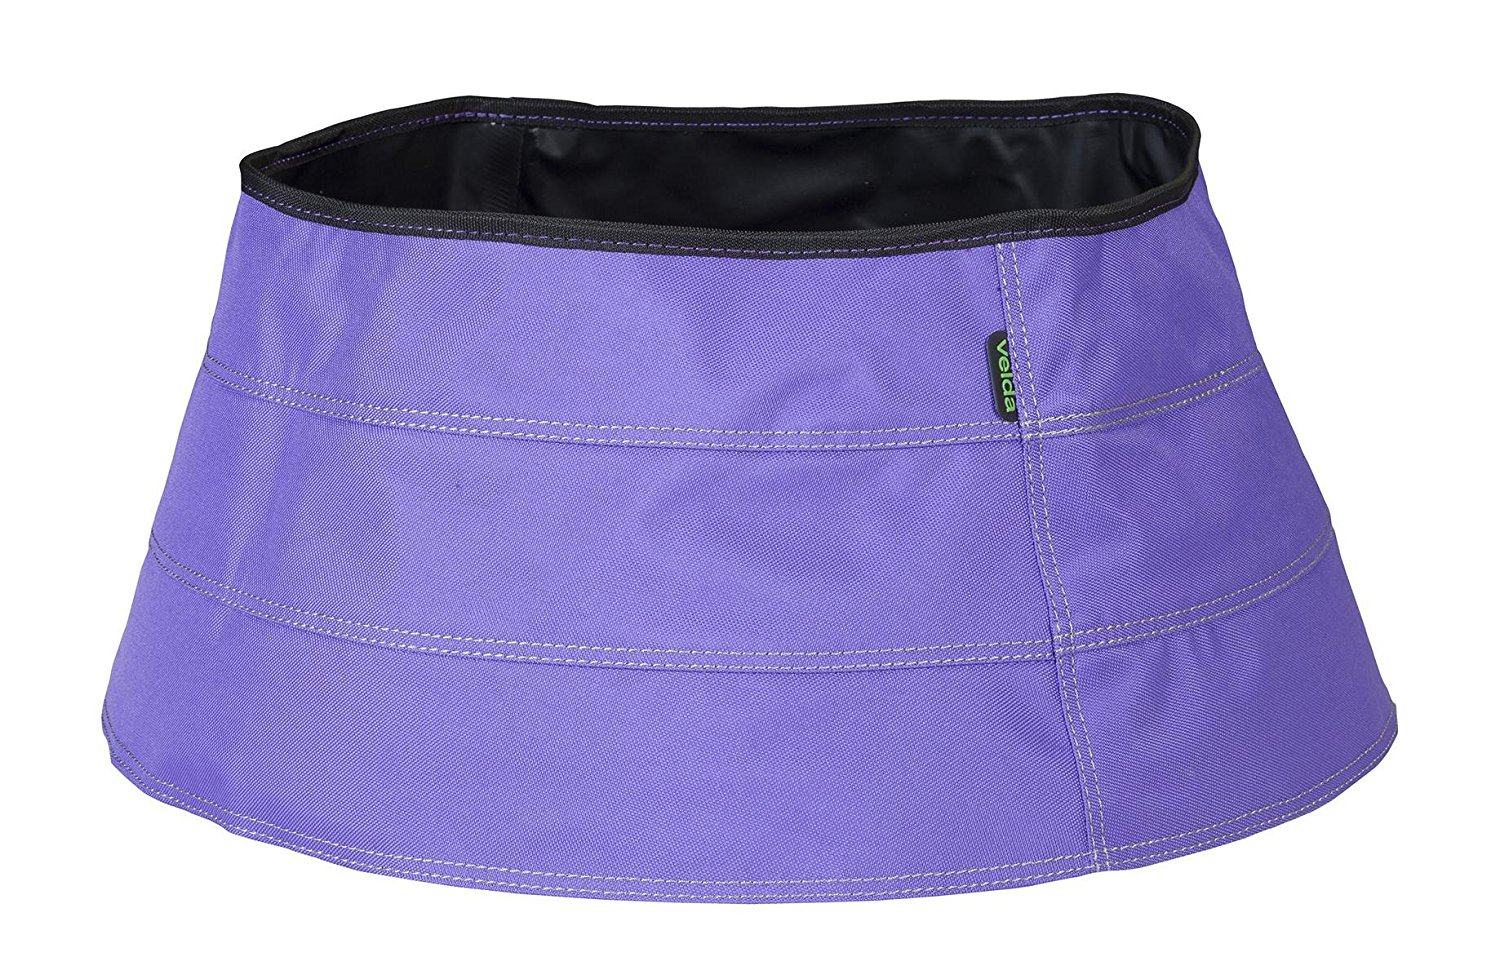 velda-trendy-Purple-50-cm-mini-bassin-exterieur-terrasse-balcon-violet